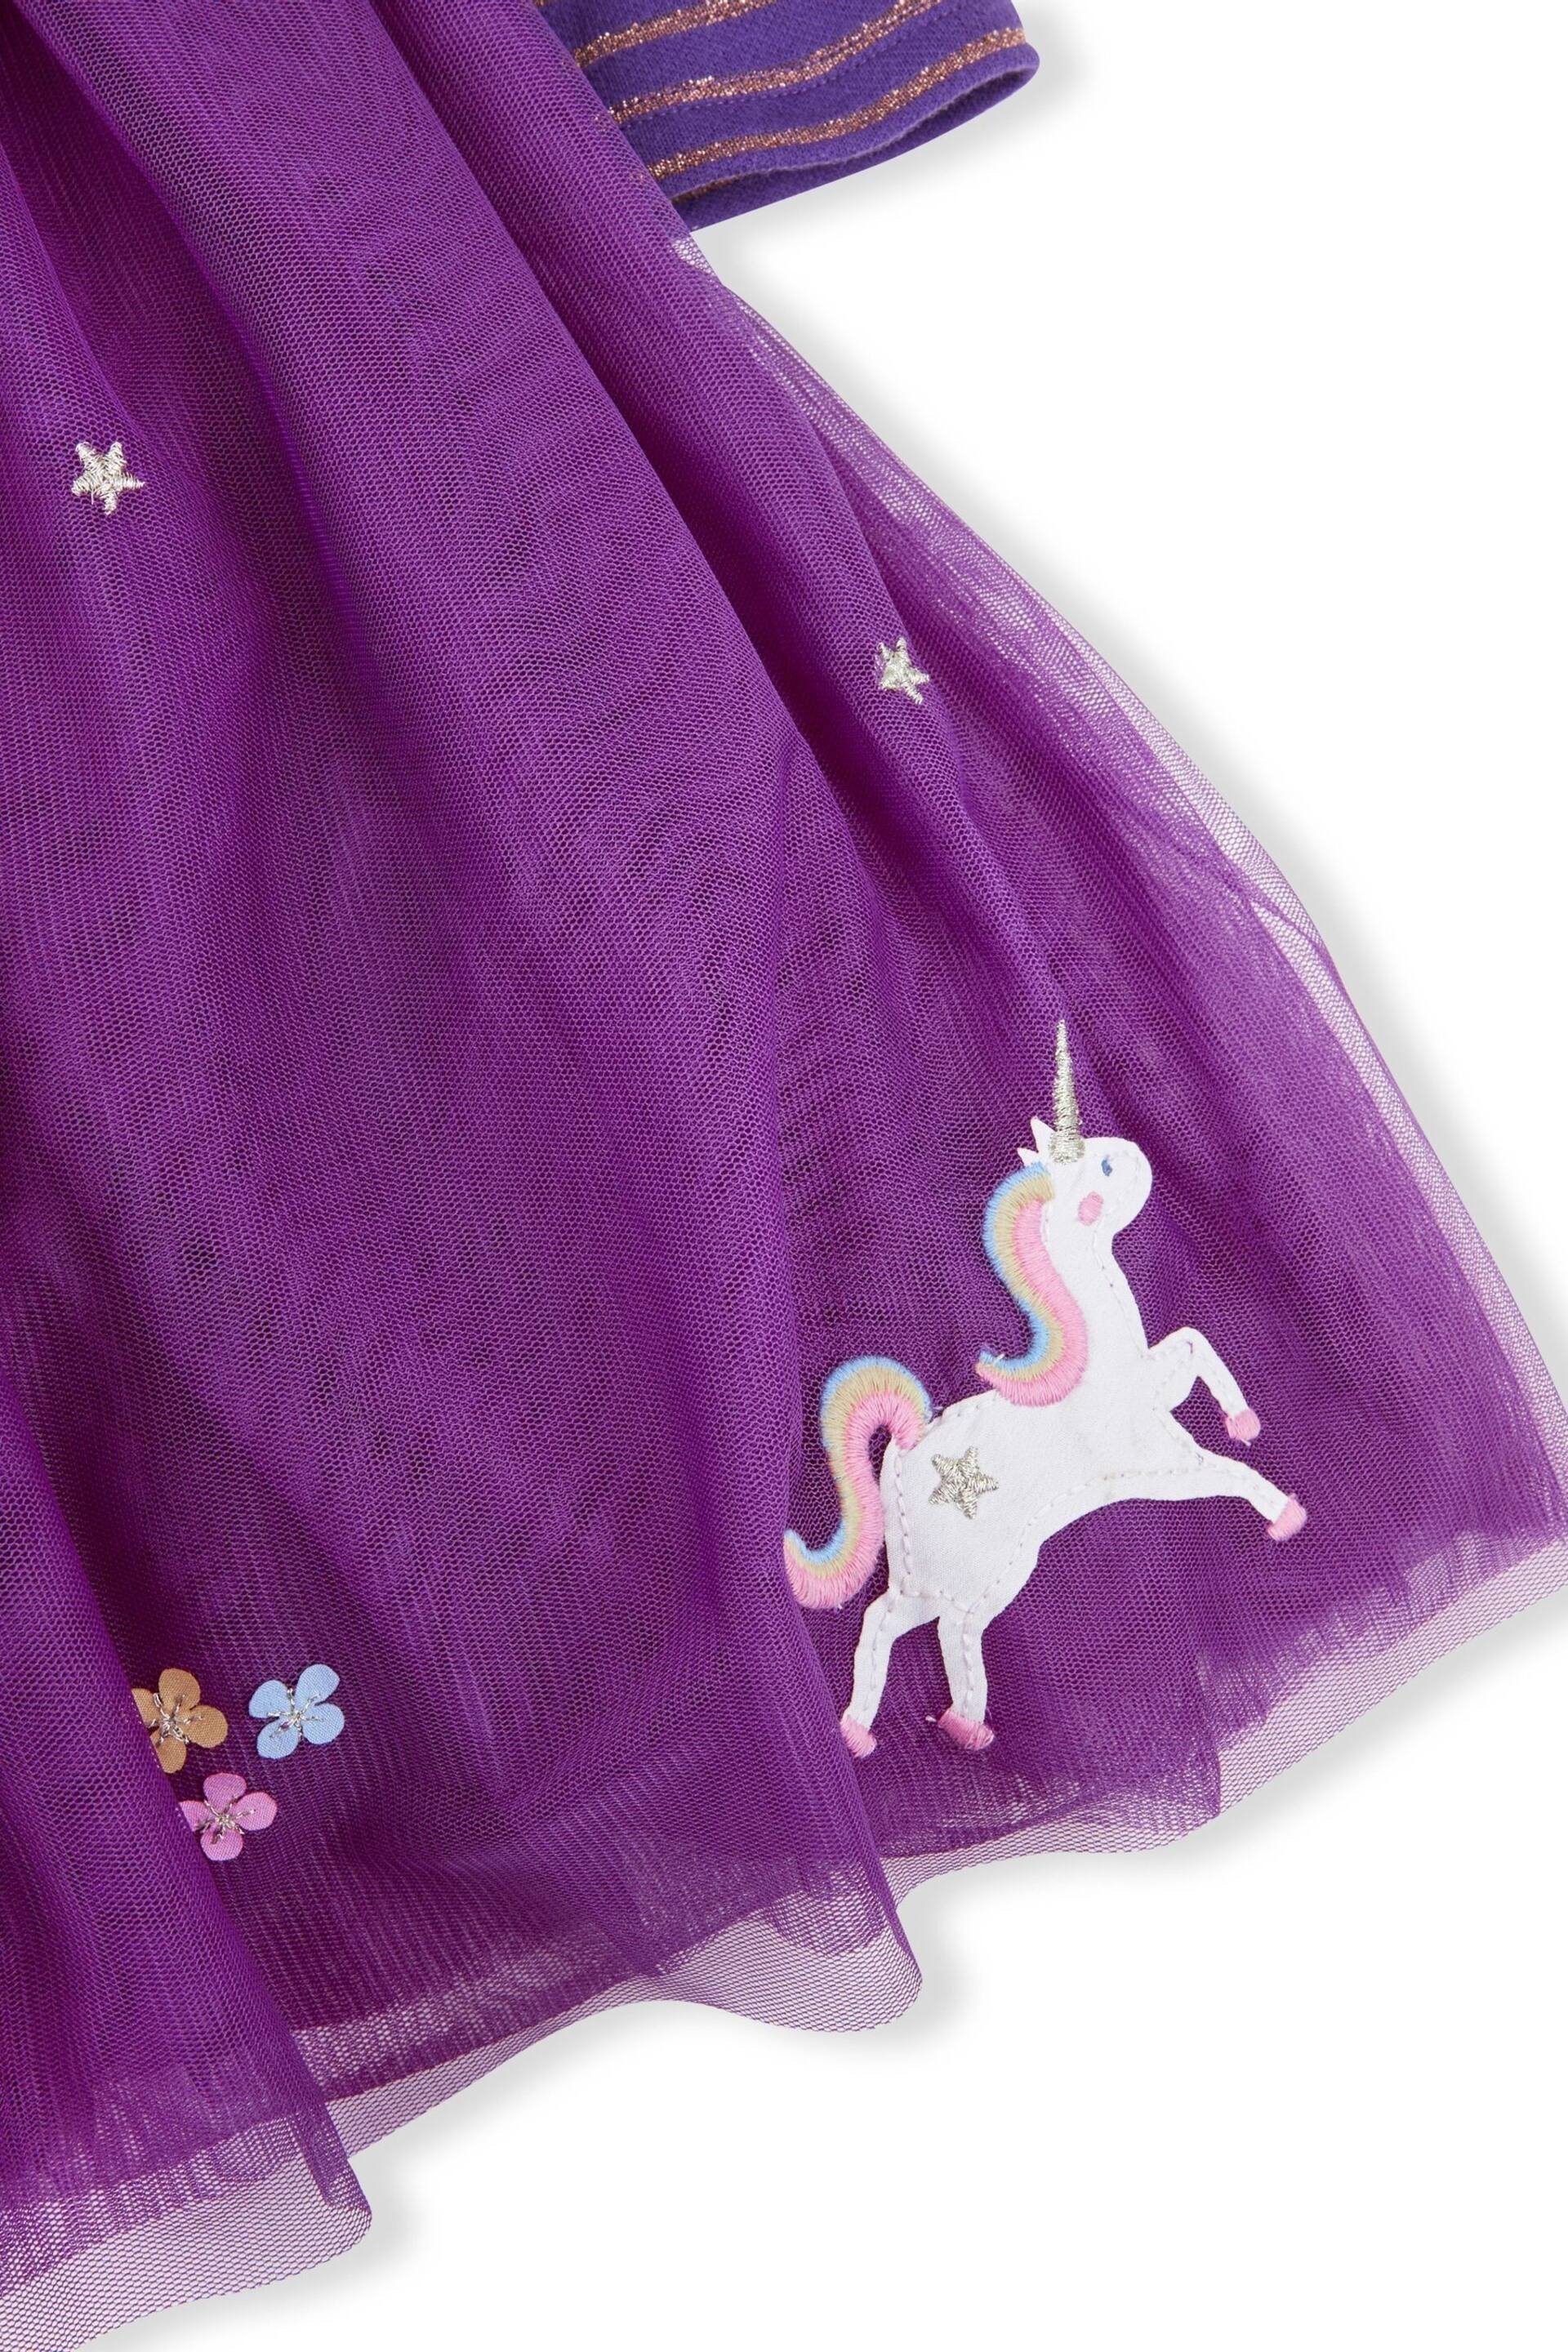 JoJo Maman Bébé Purple Unicorn Party Dress - Image 4 of 4